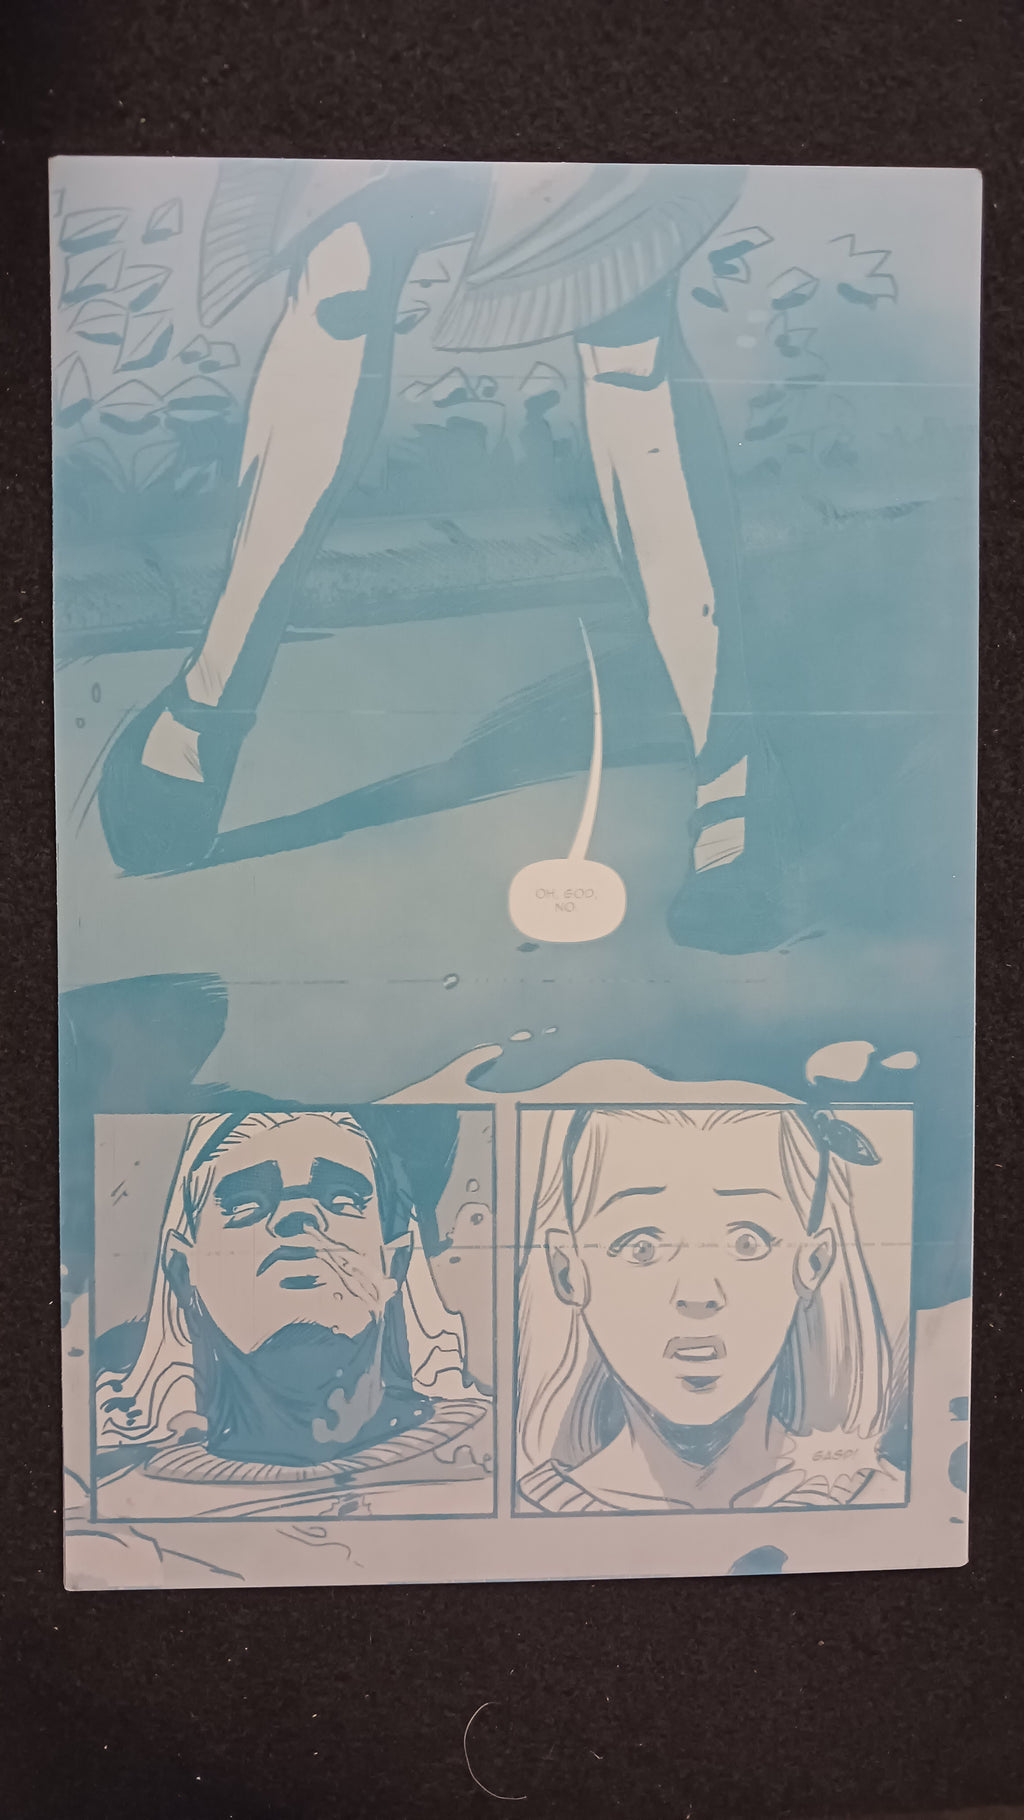 Banshees #2 - Page 22 Splash - PRESSWORKS - Comic Art - Printer Plate - Cyan